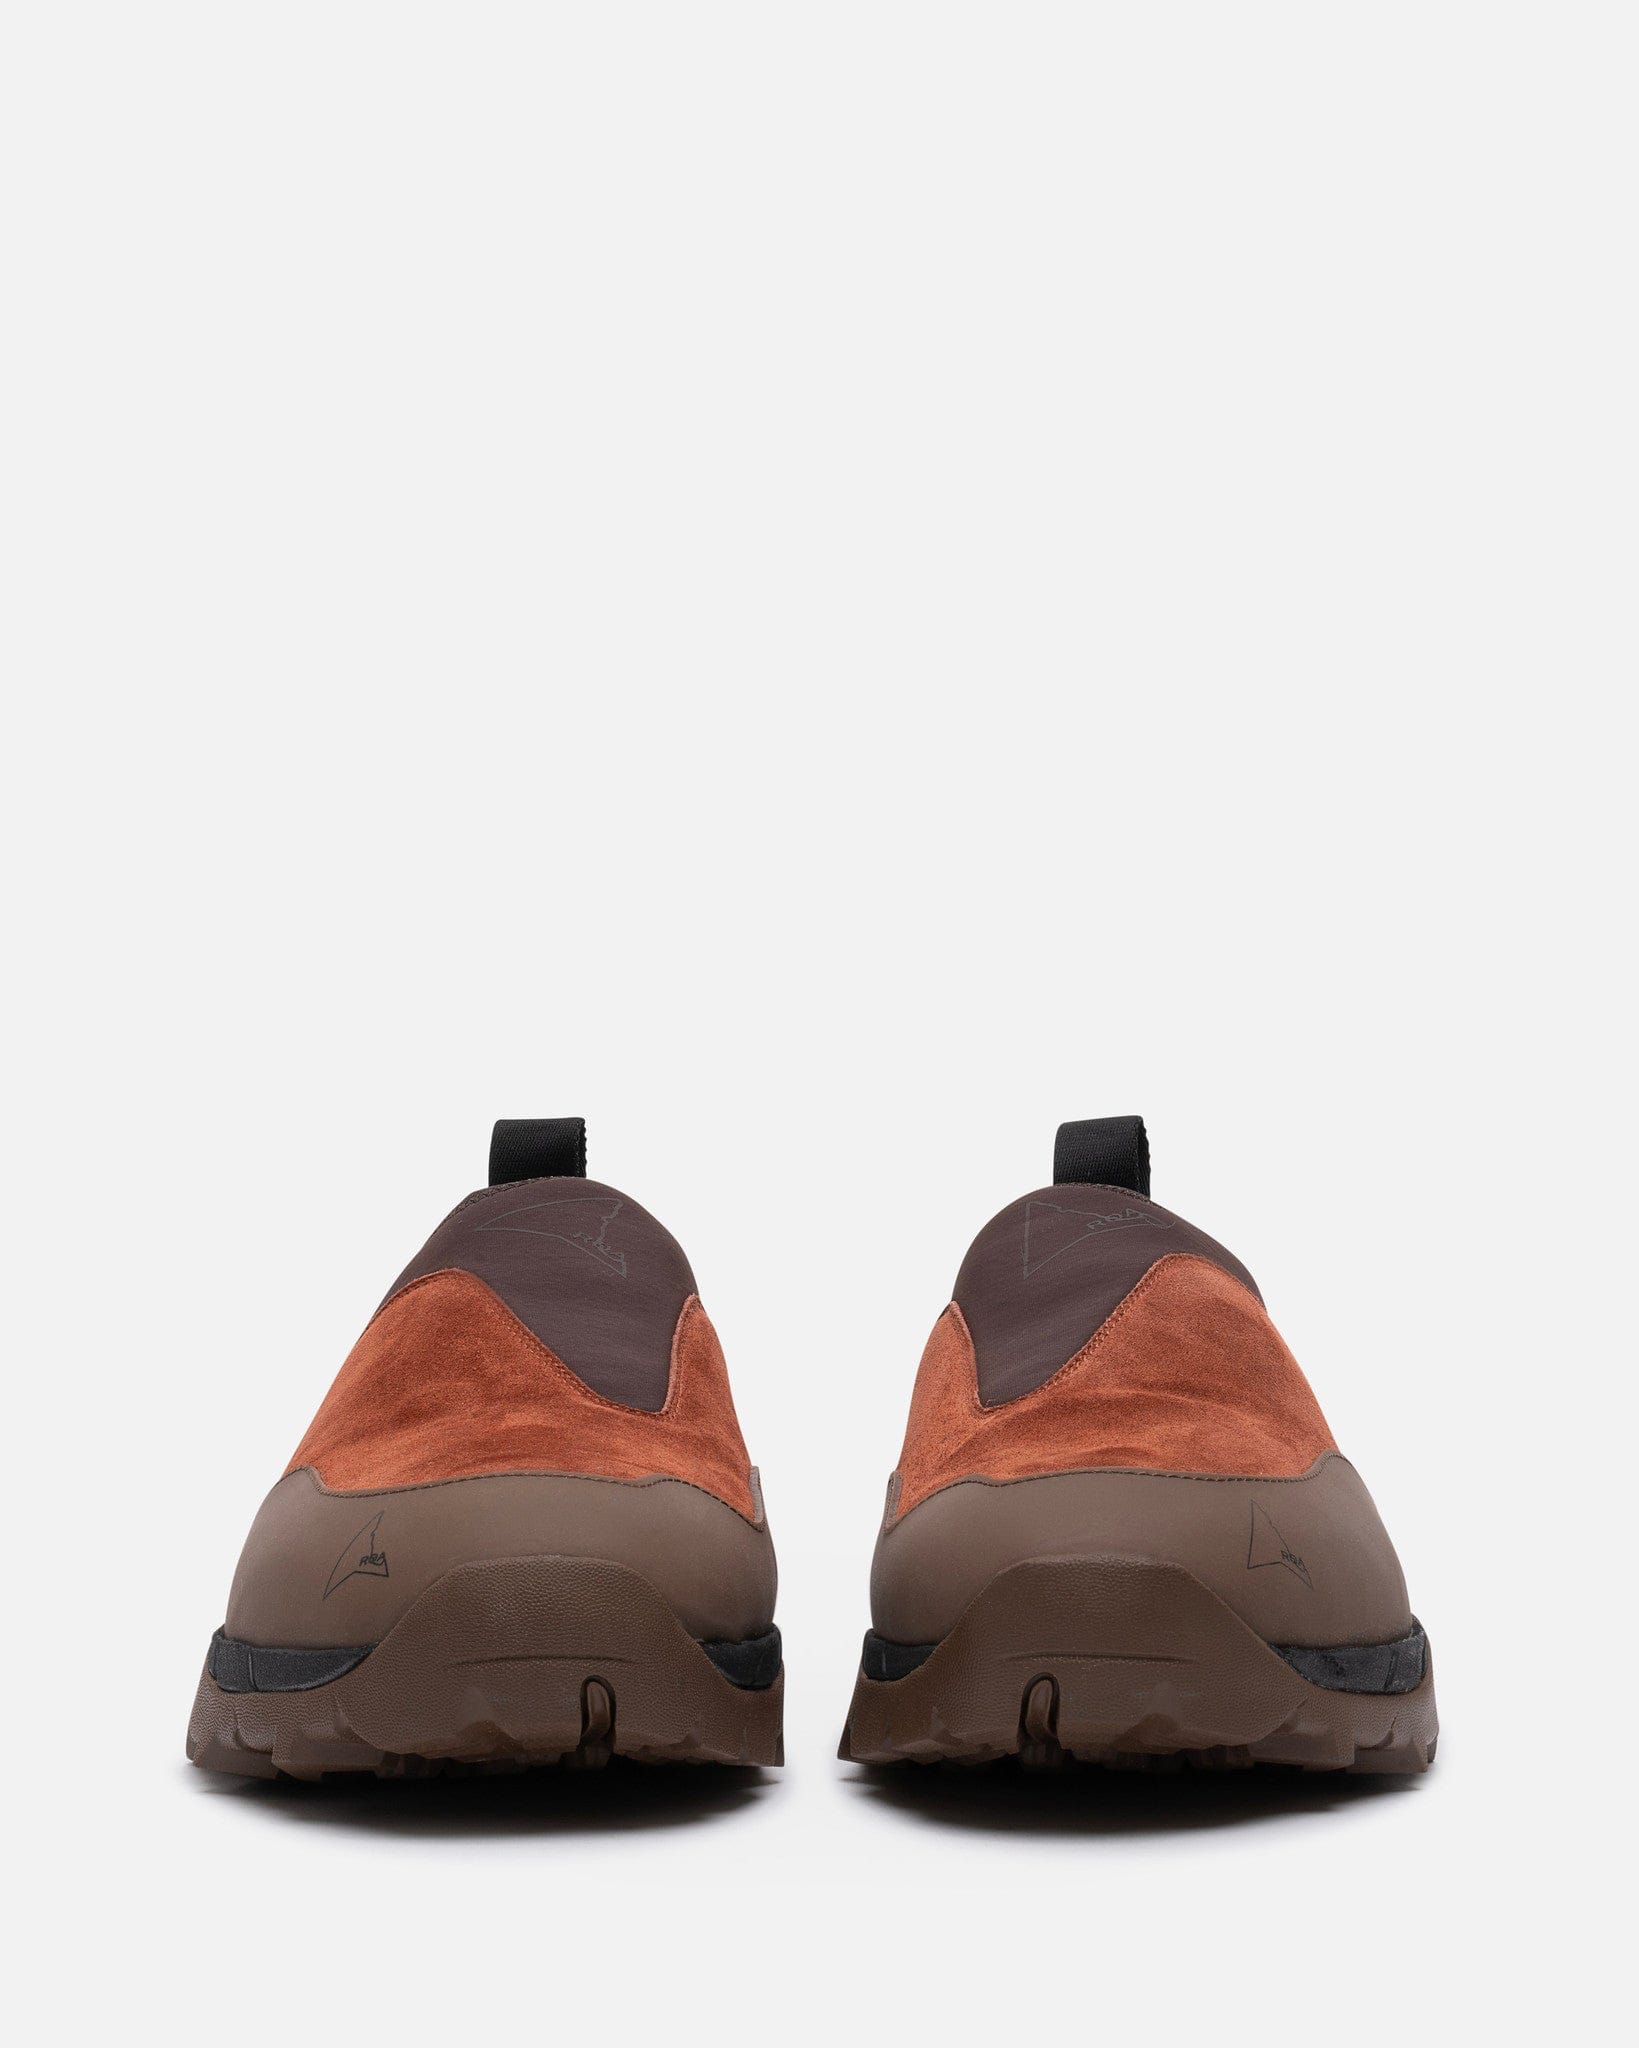 Roa Men's Sneakers Slip On in Rust